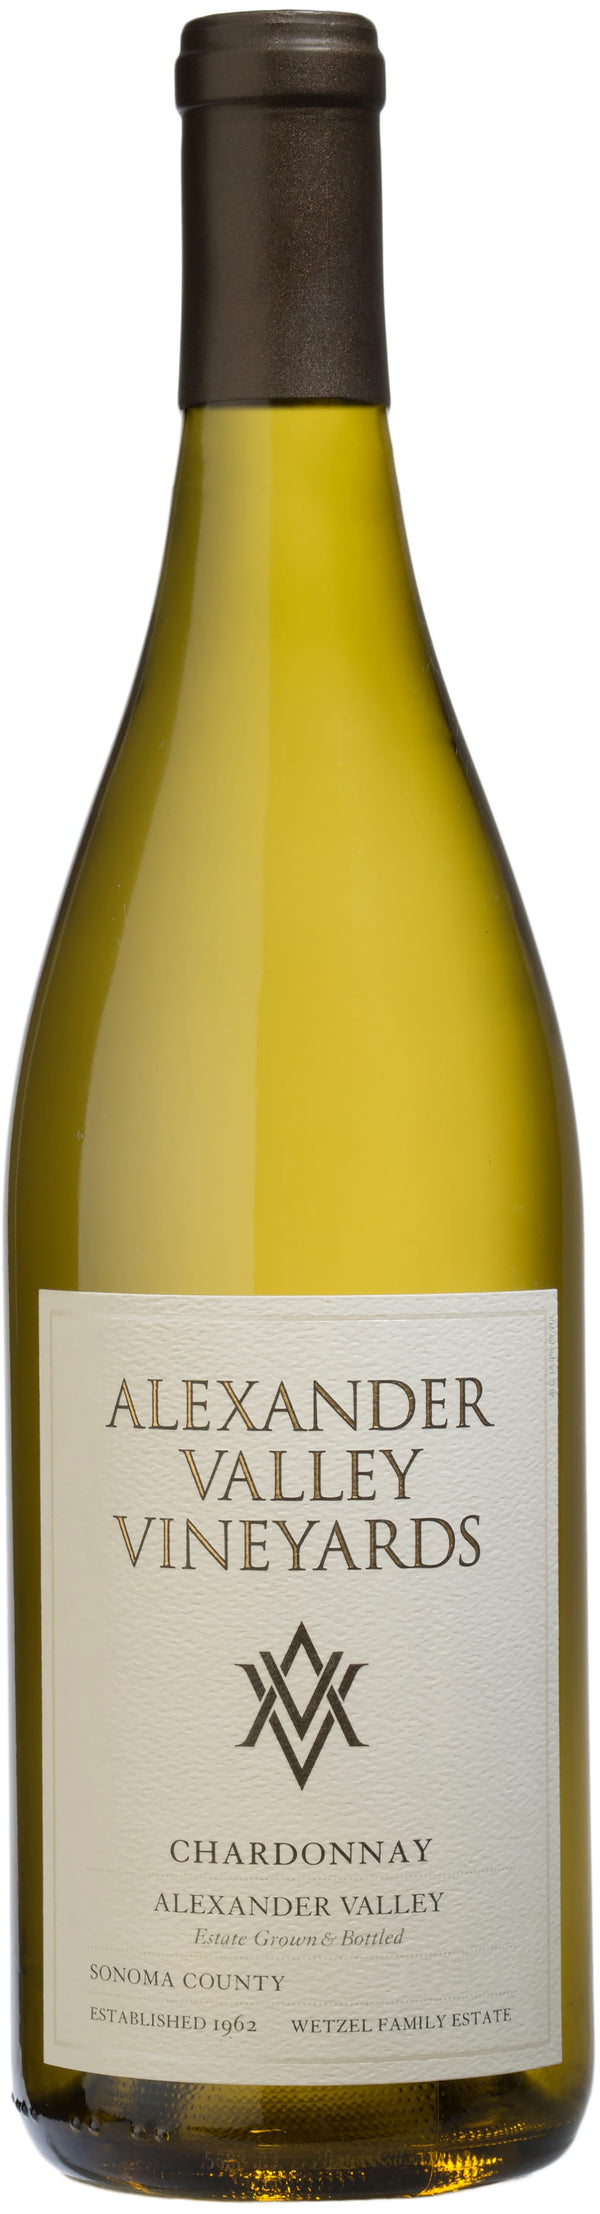 Alexander Valley Vineyards Chardonnay, Alexander Valley